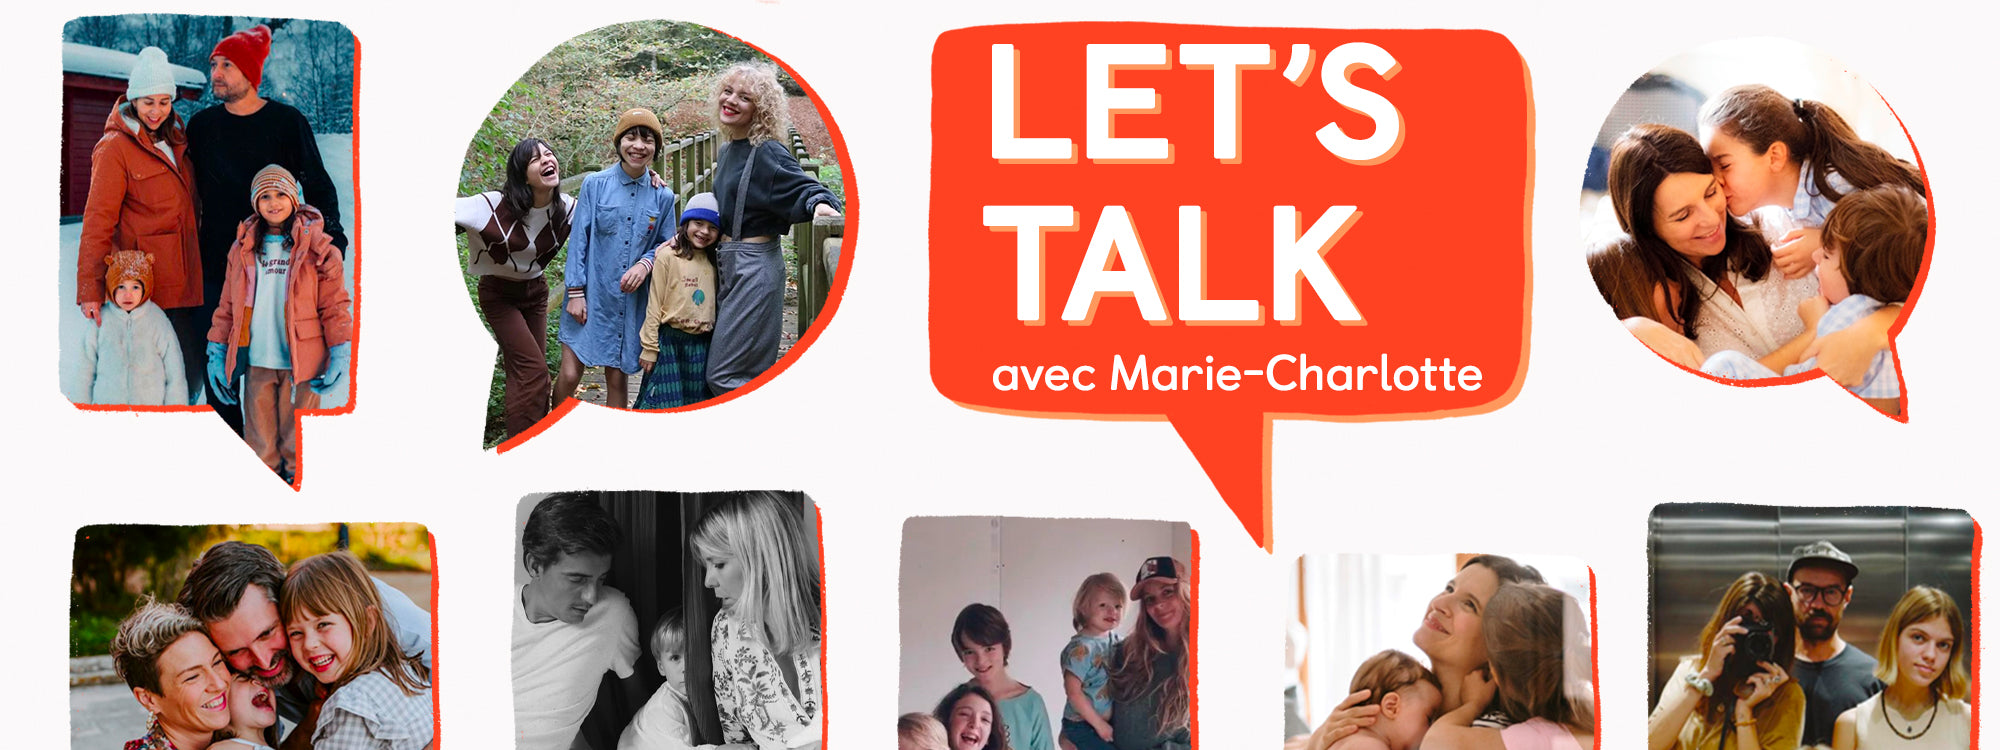 Let's Talk avec Marie-Charlotte